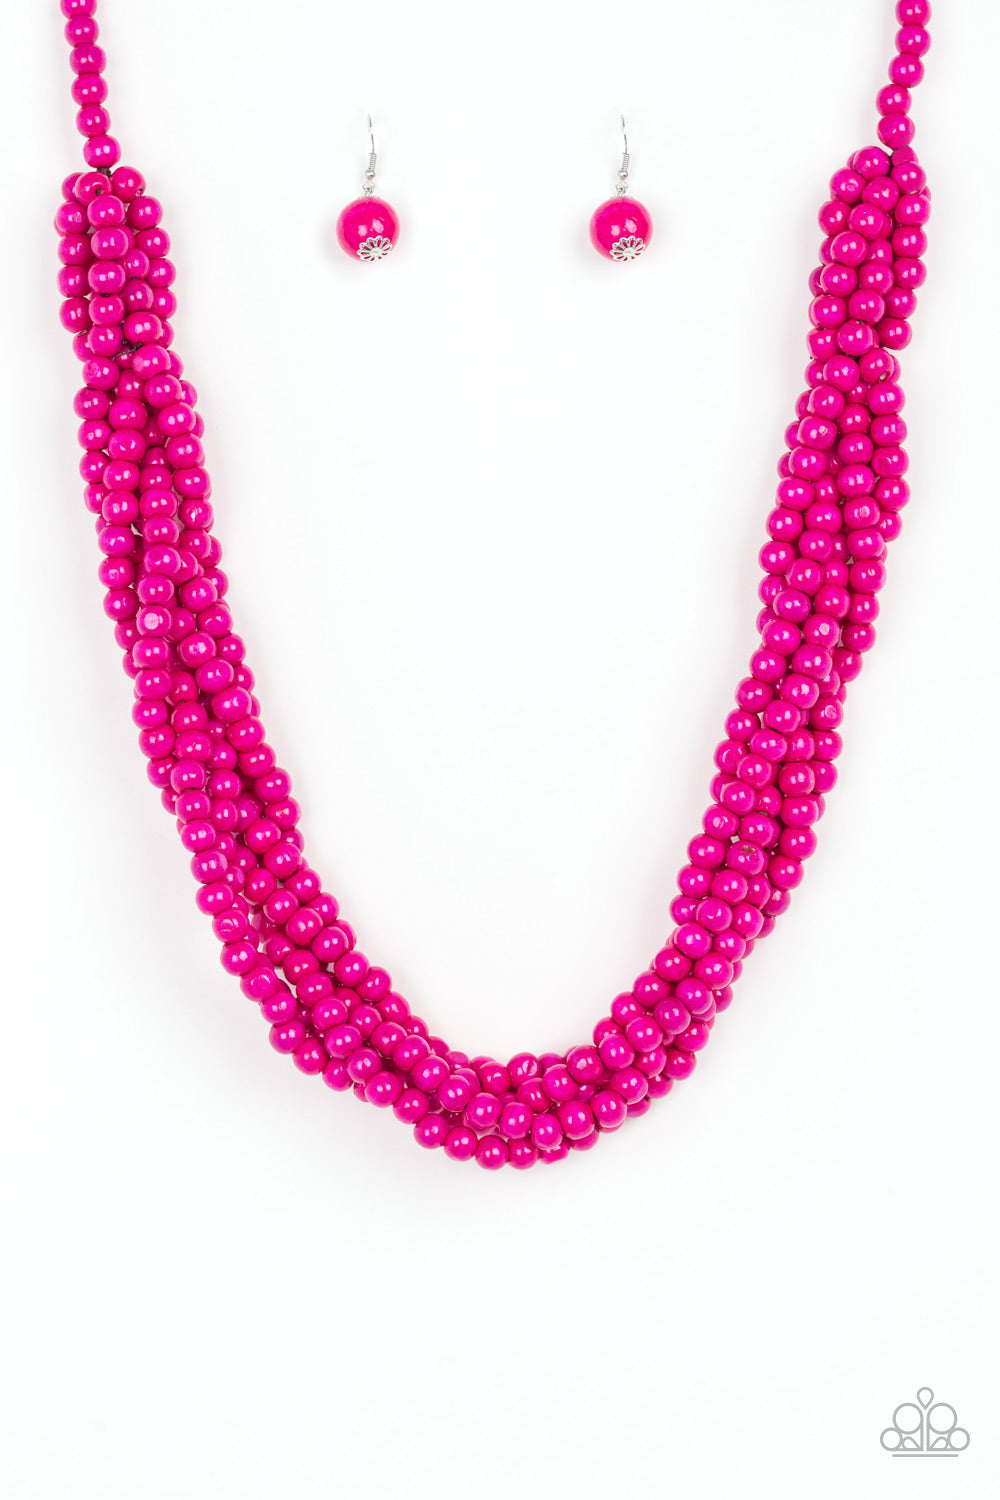 Tahiti Tropic Pink Paparazzi Necklaces Cashmere Pink Jewels - Cashmere Pink Jewels & Accessories, Cashmere Pink Jewels & Accessories - Paparazzi